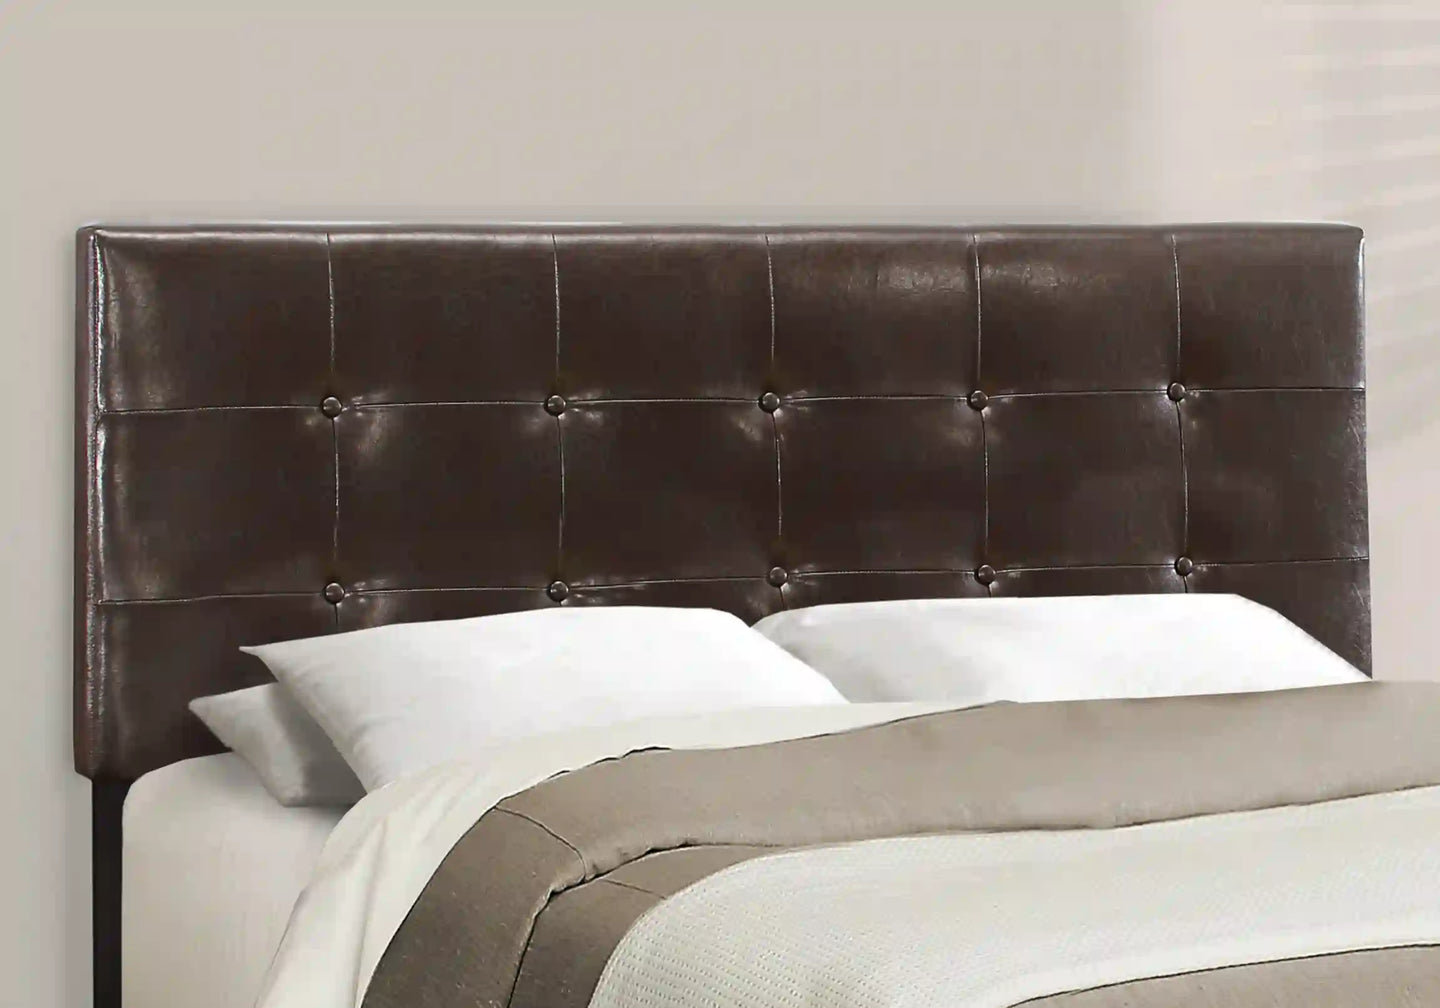 Brown Bed - I 5922Q